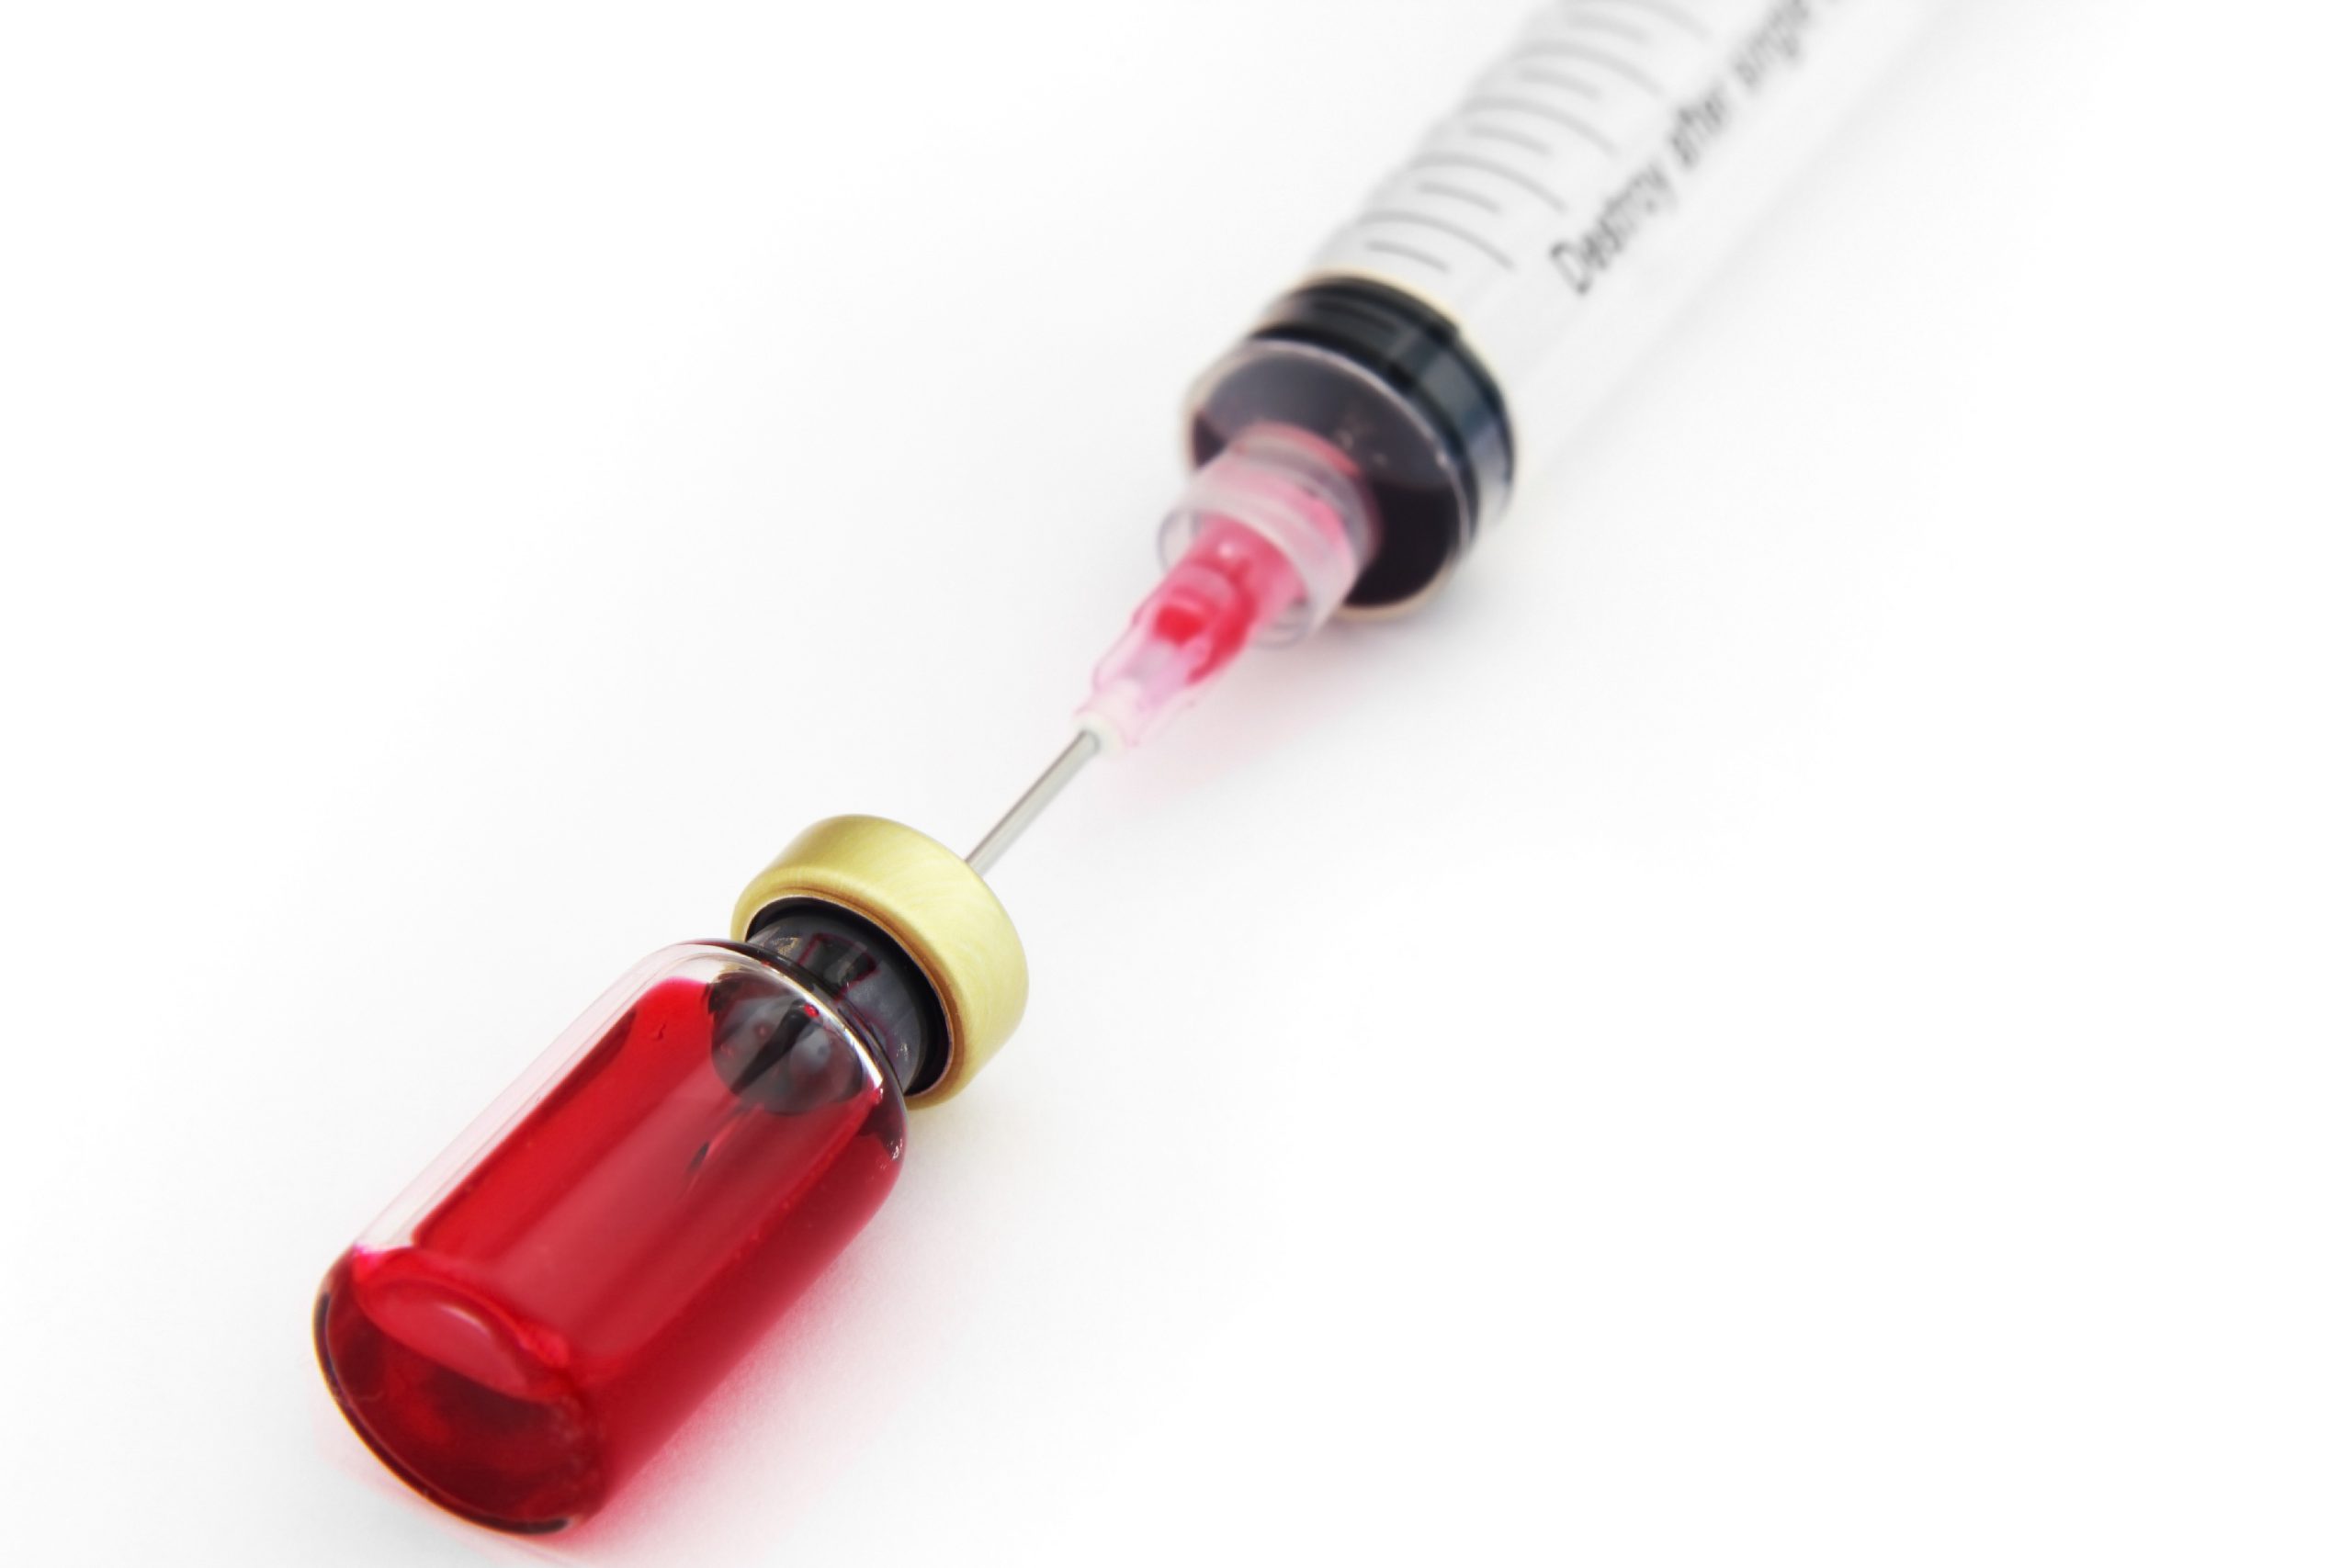 Syringe and blood vial